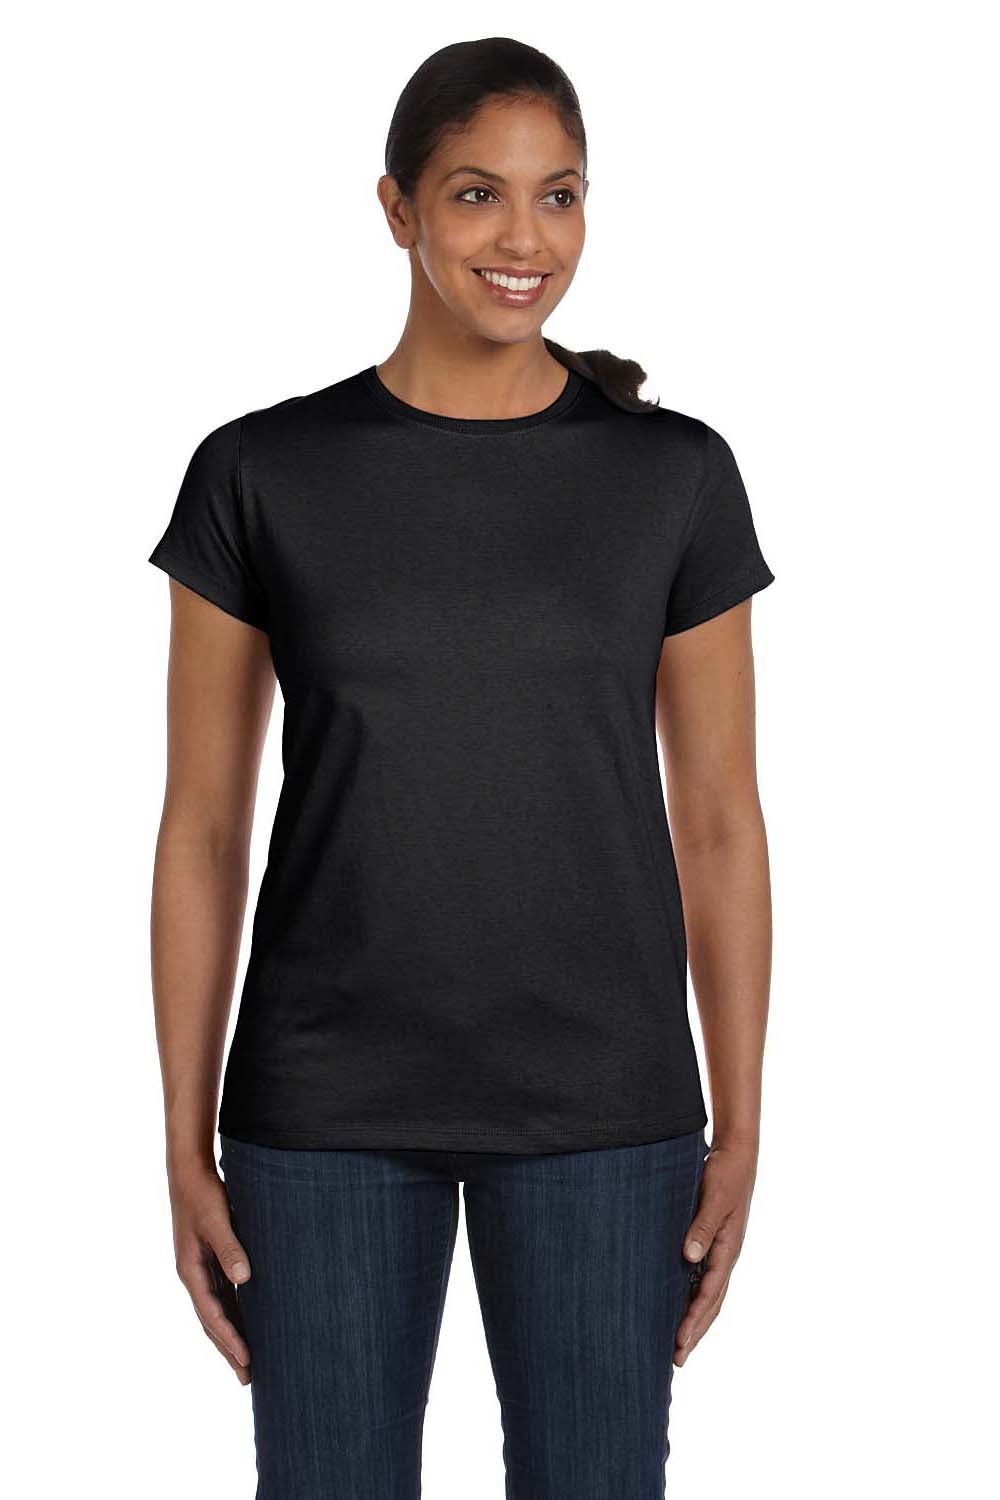 Hanes 5680 Womens ComfortSoft Short Sleeve Crewneck T-Shirt Black Front